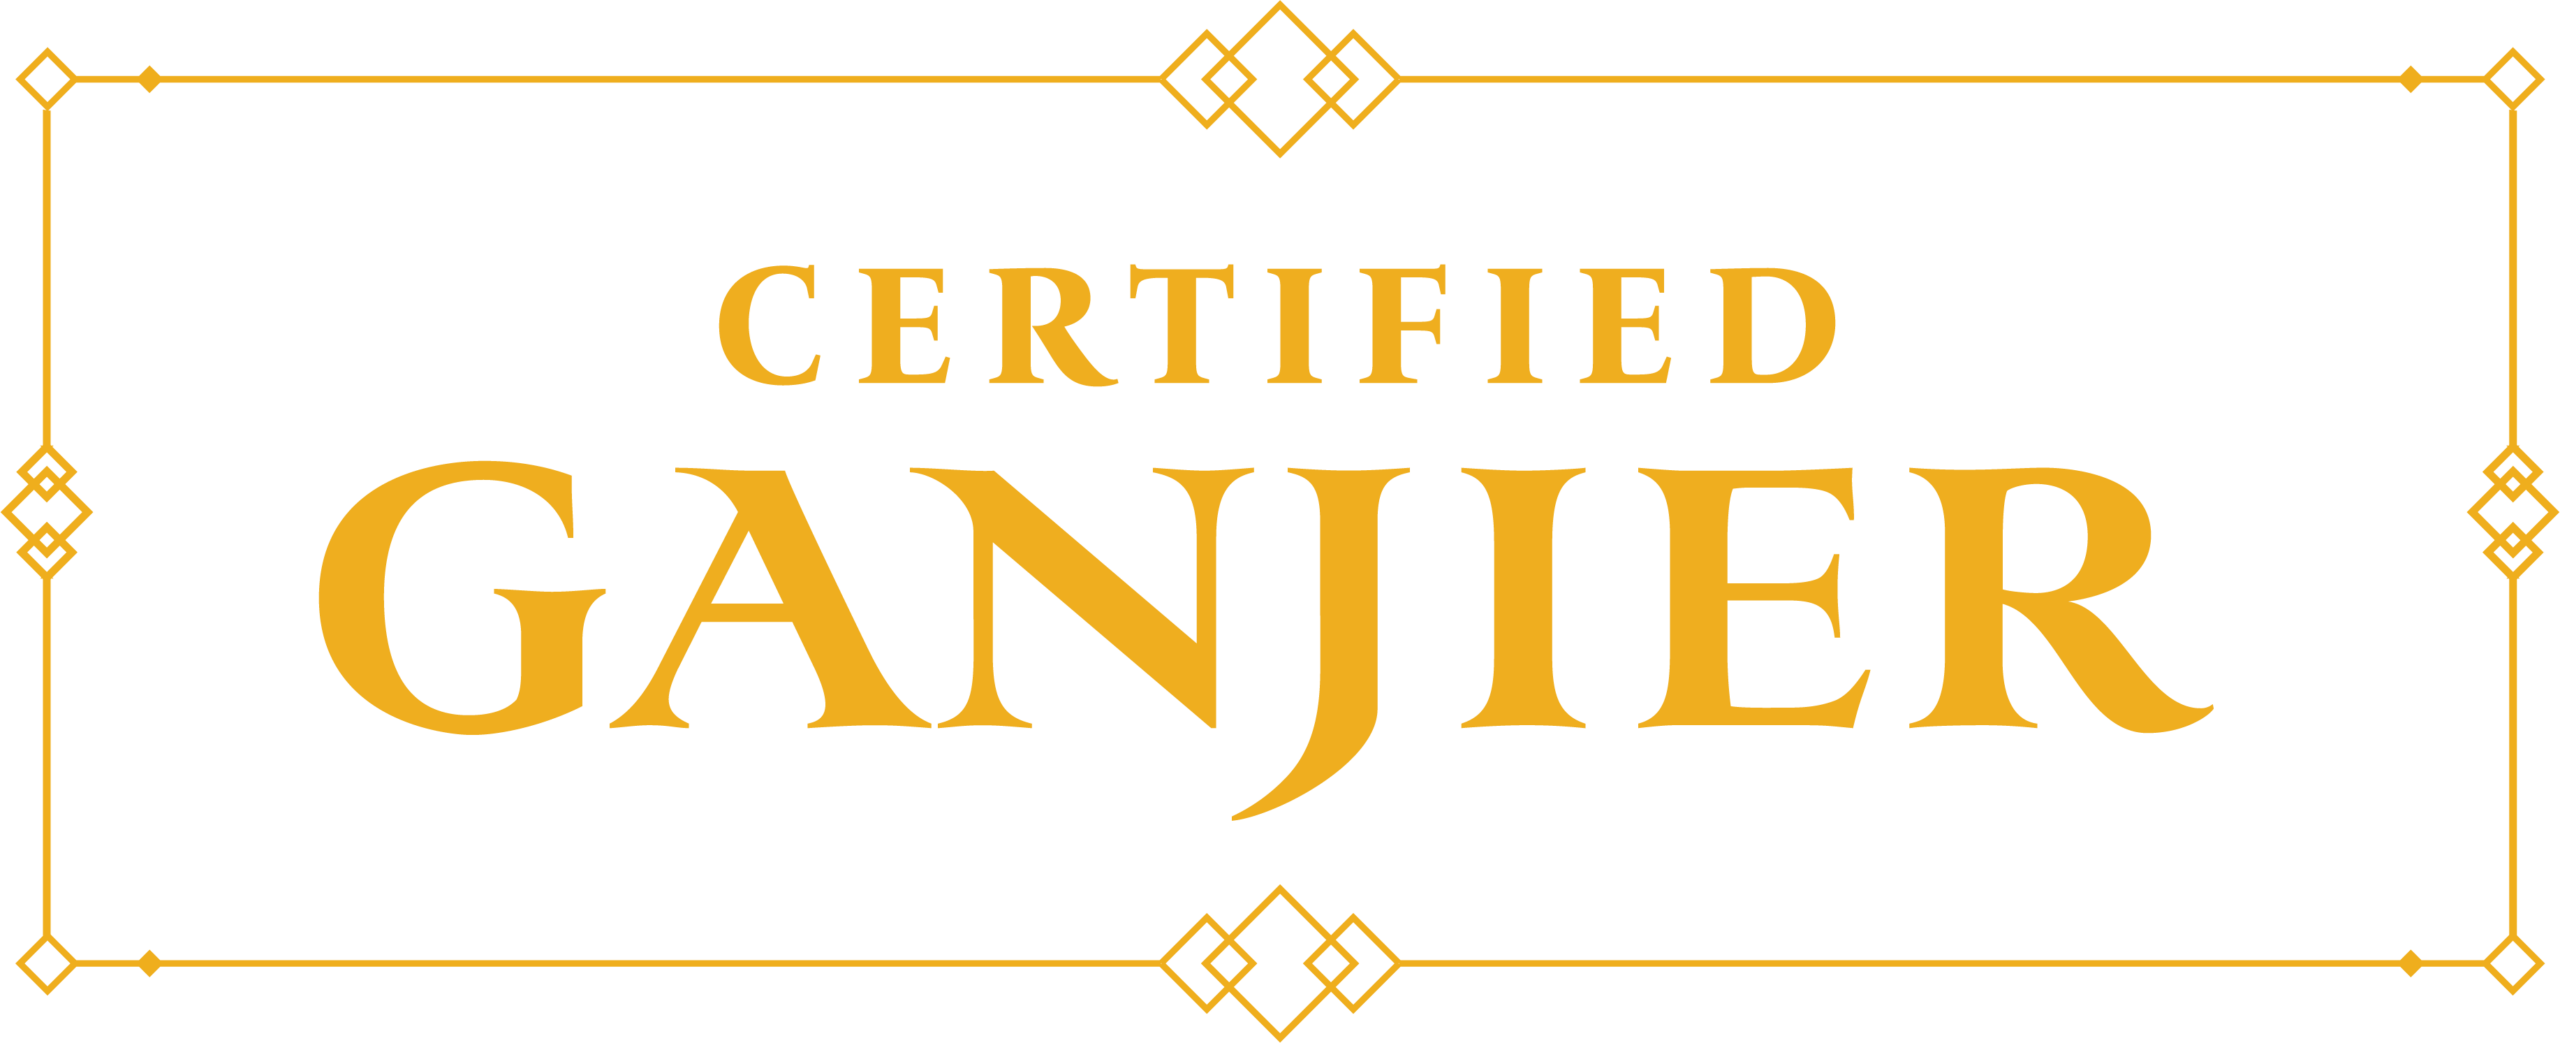 Certified Ganjier